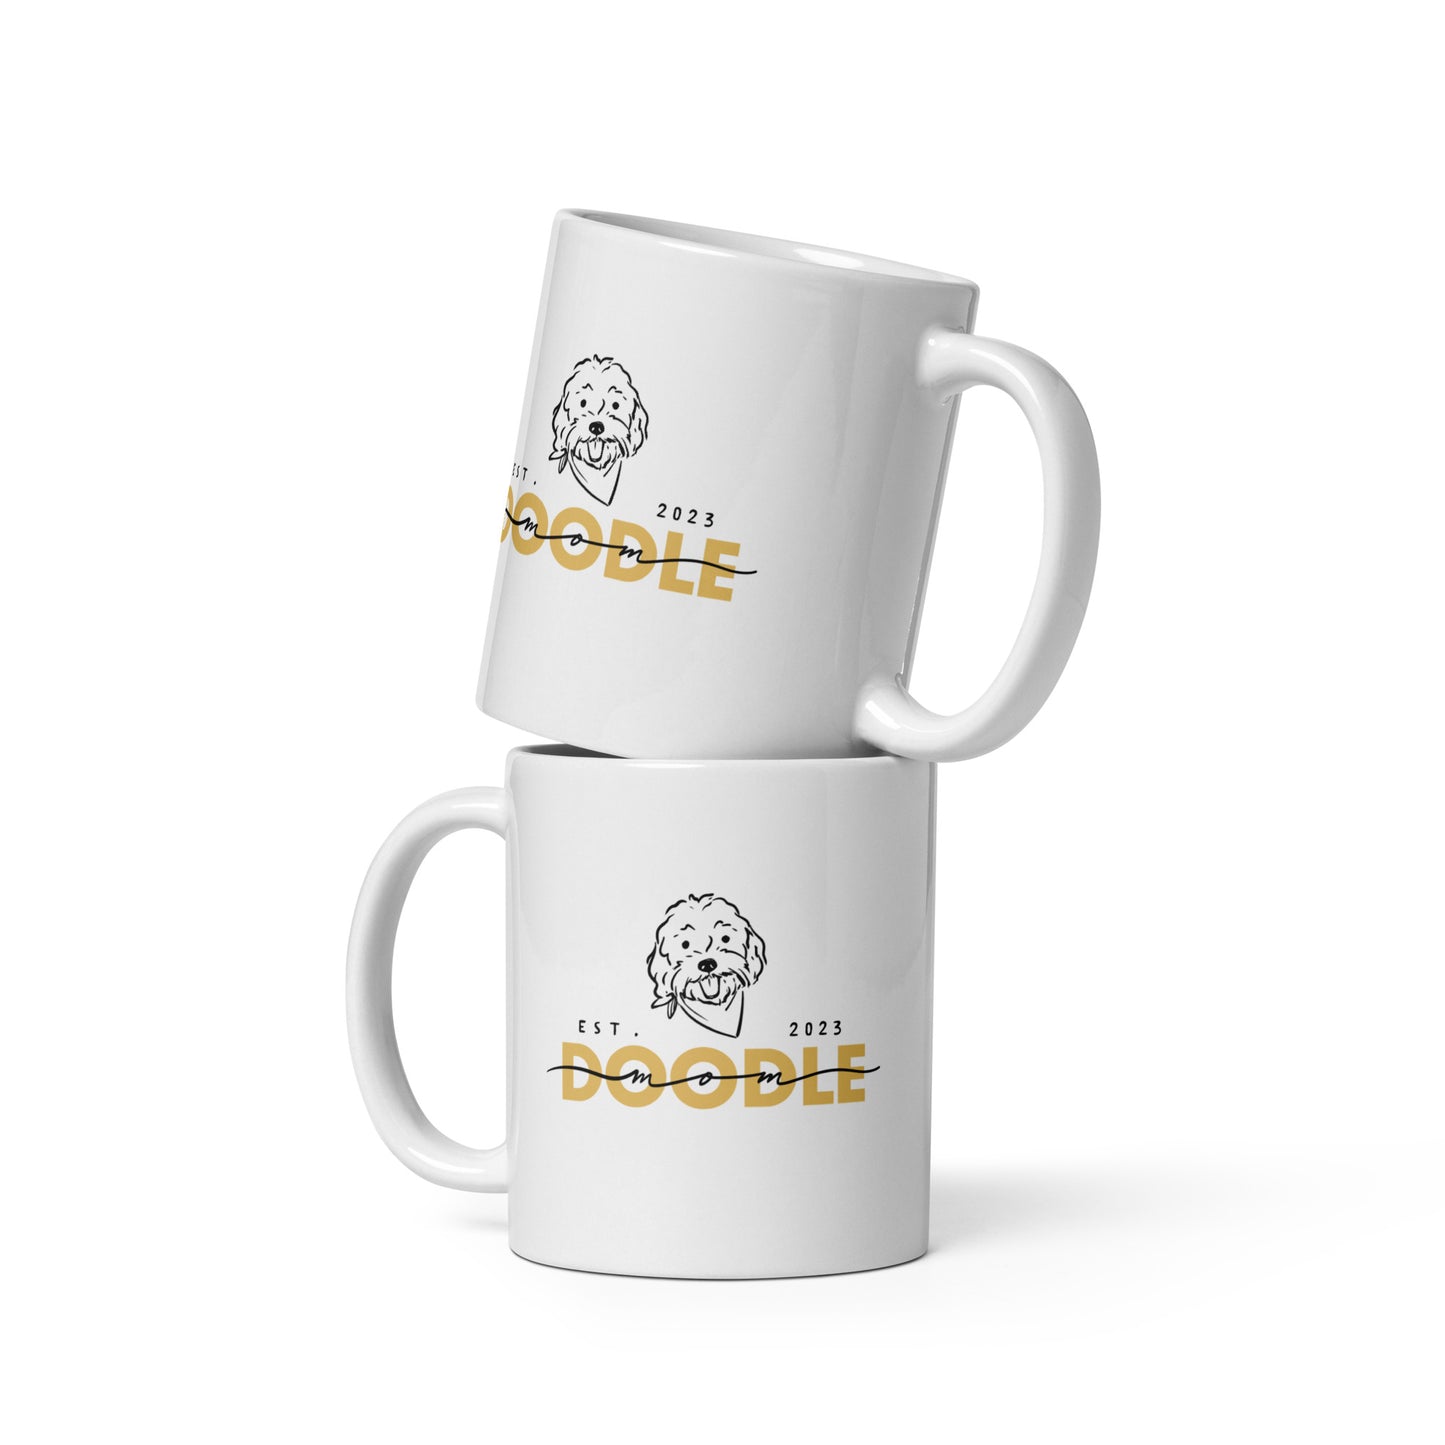 White ceramic coffee mug with cute doodle dog design and words Doodle Mom Est. 2023